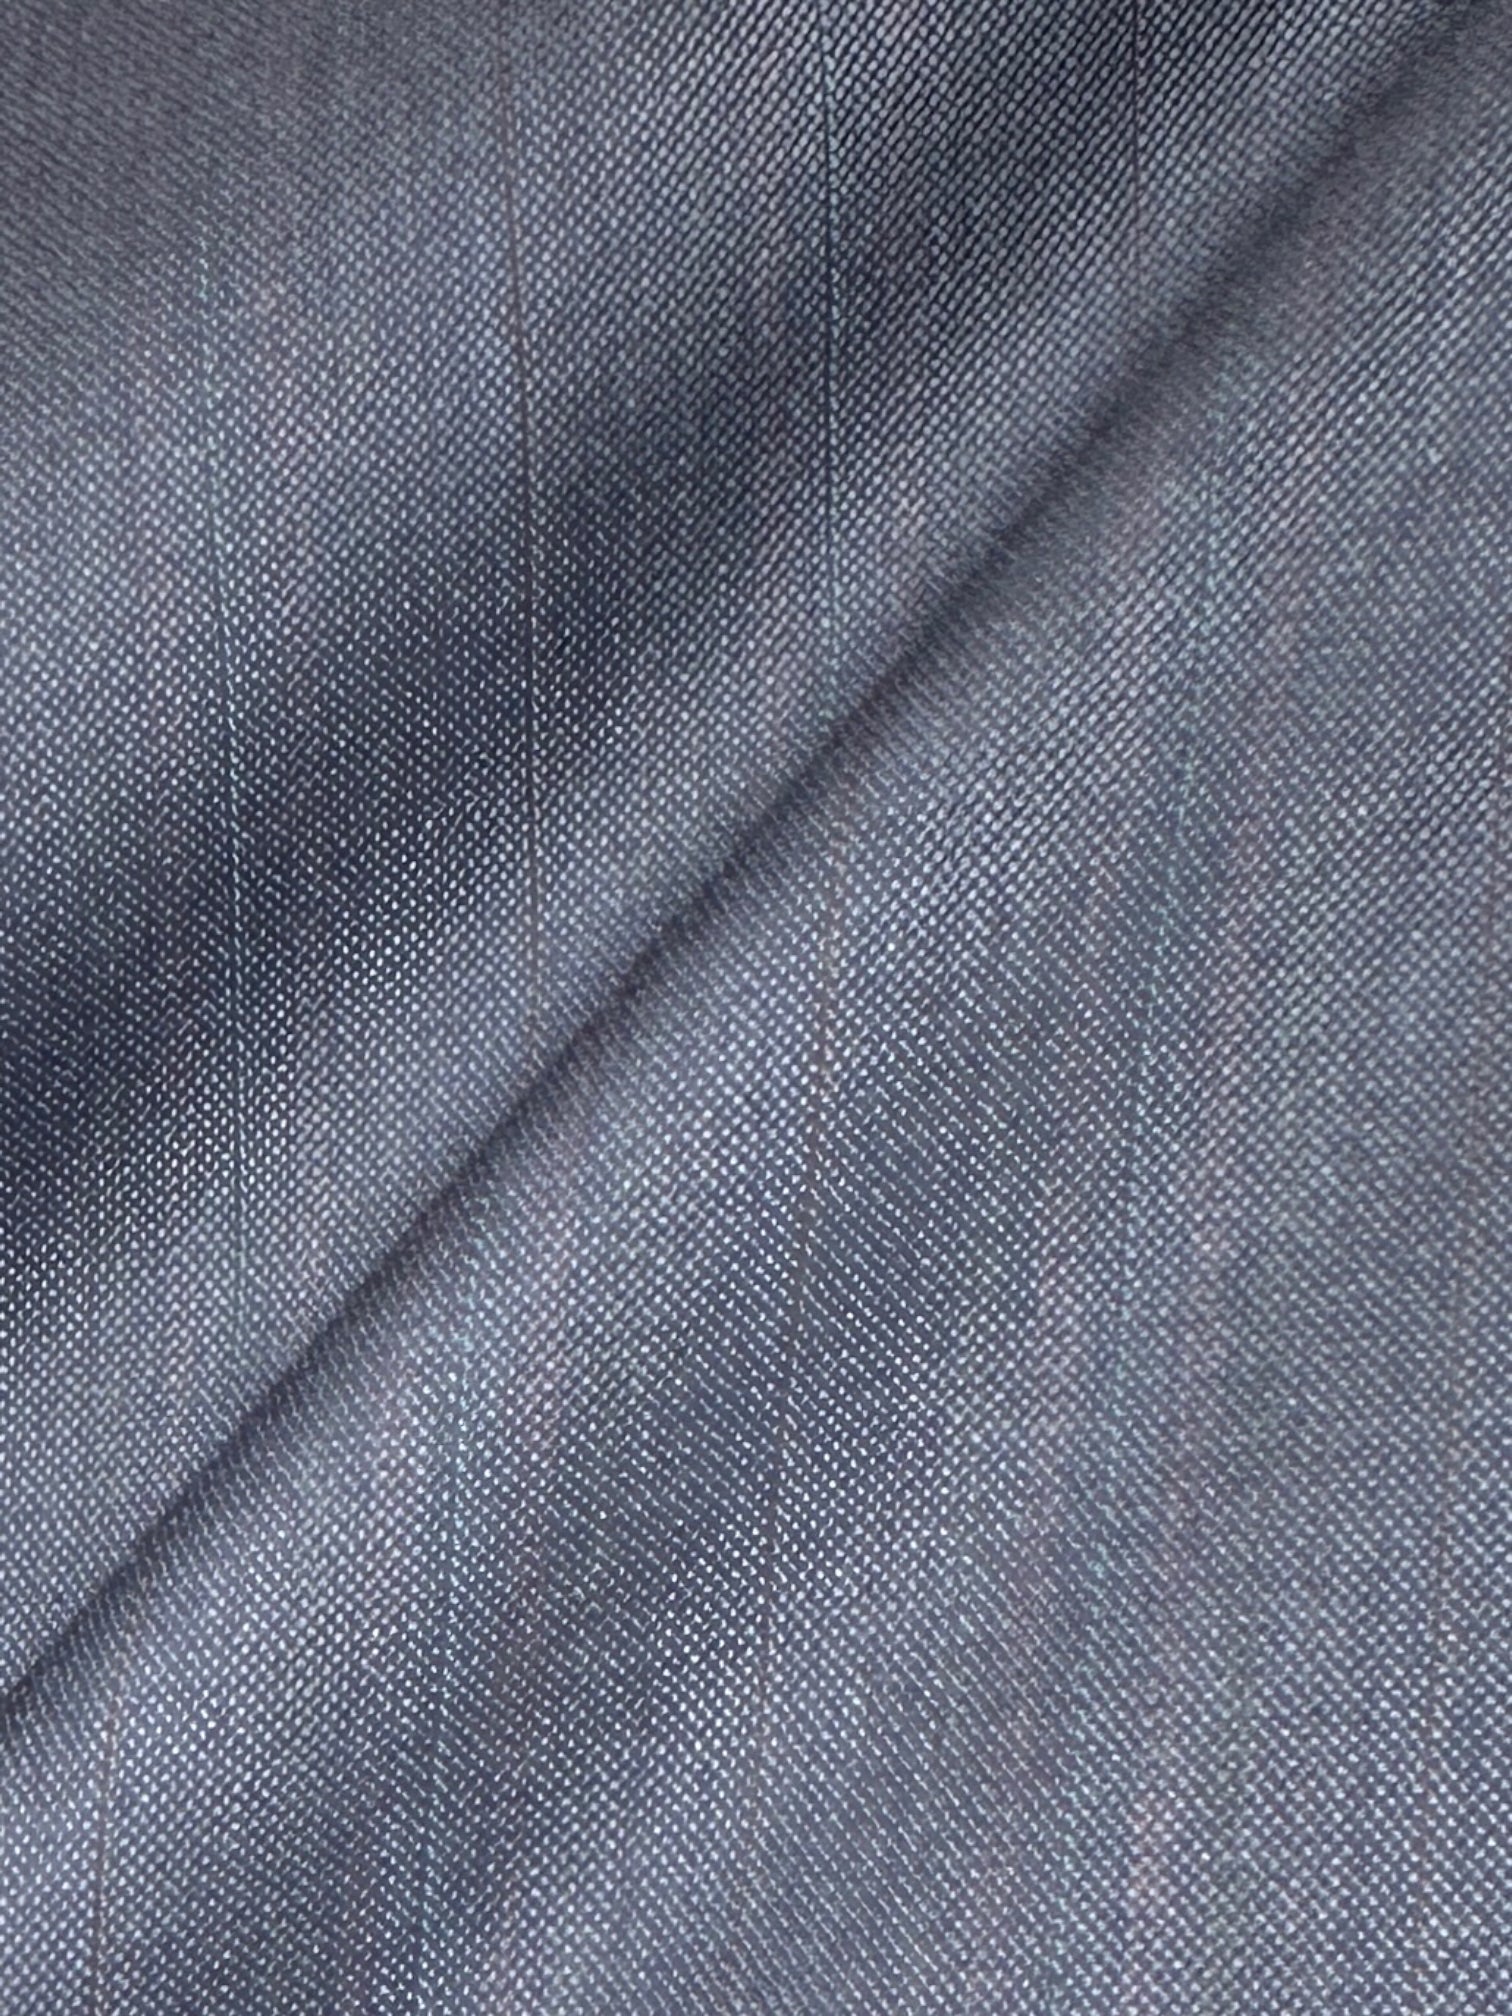 Brioni Blue Traiano Pinstripe Suit